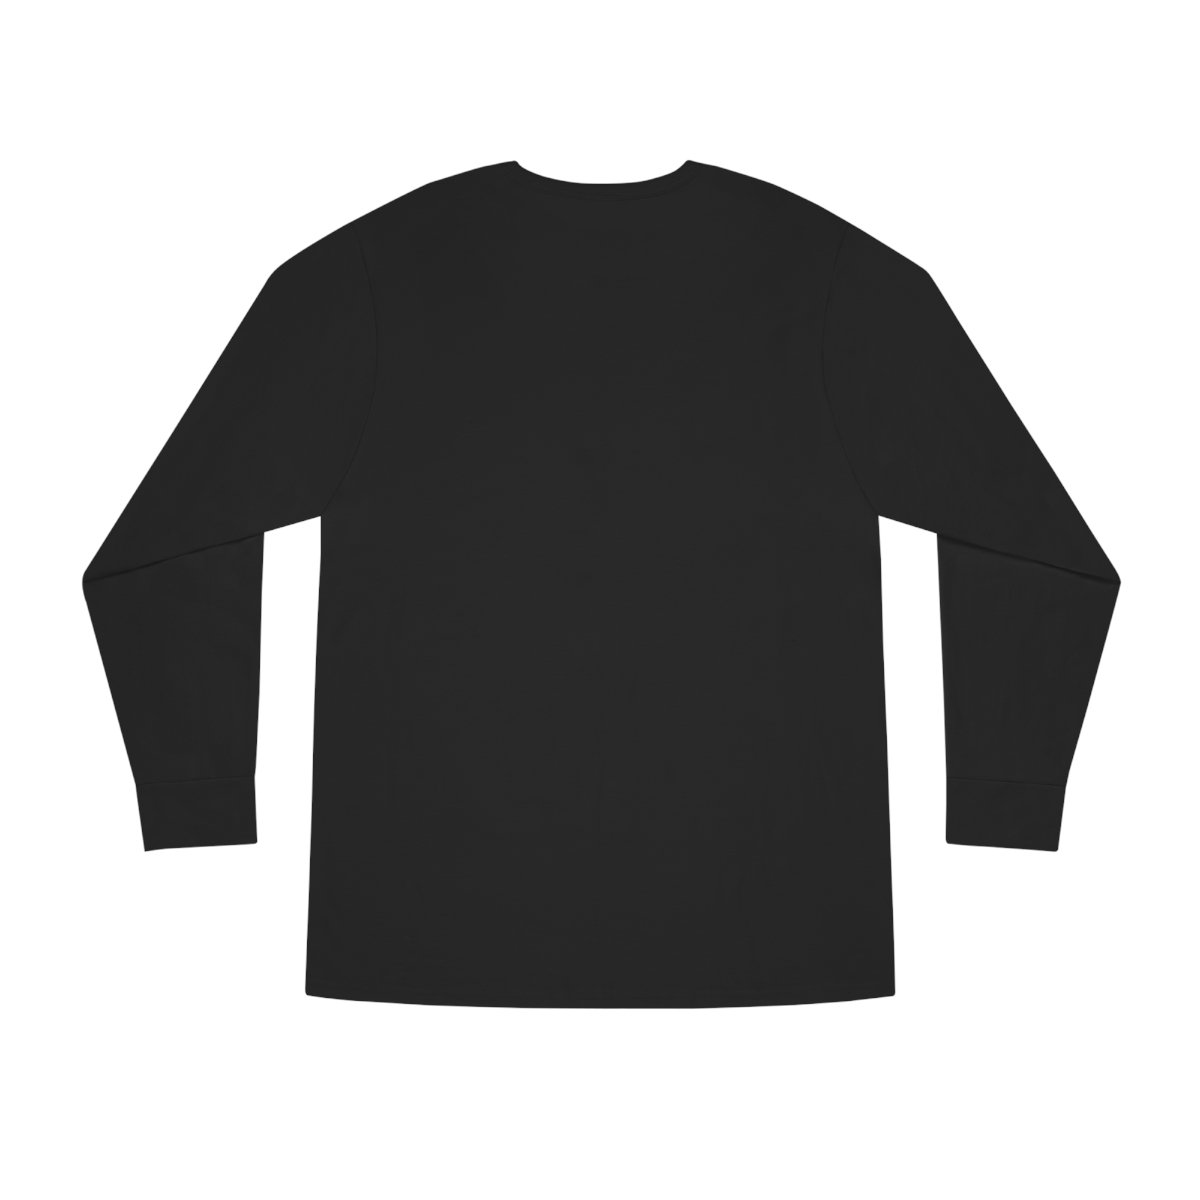 Rottweiler Records Logo Long Sleeve Tshirt